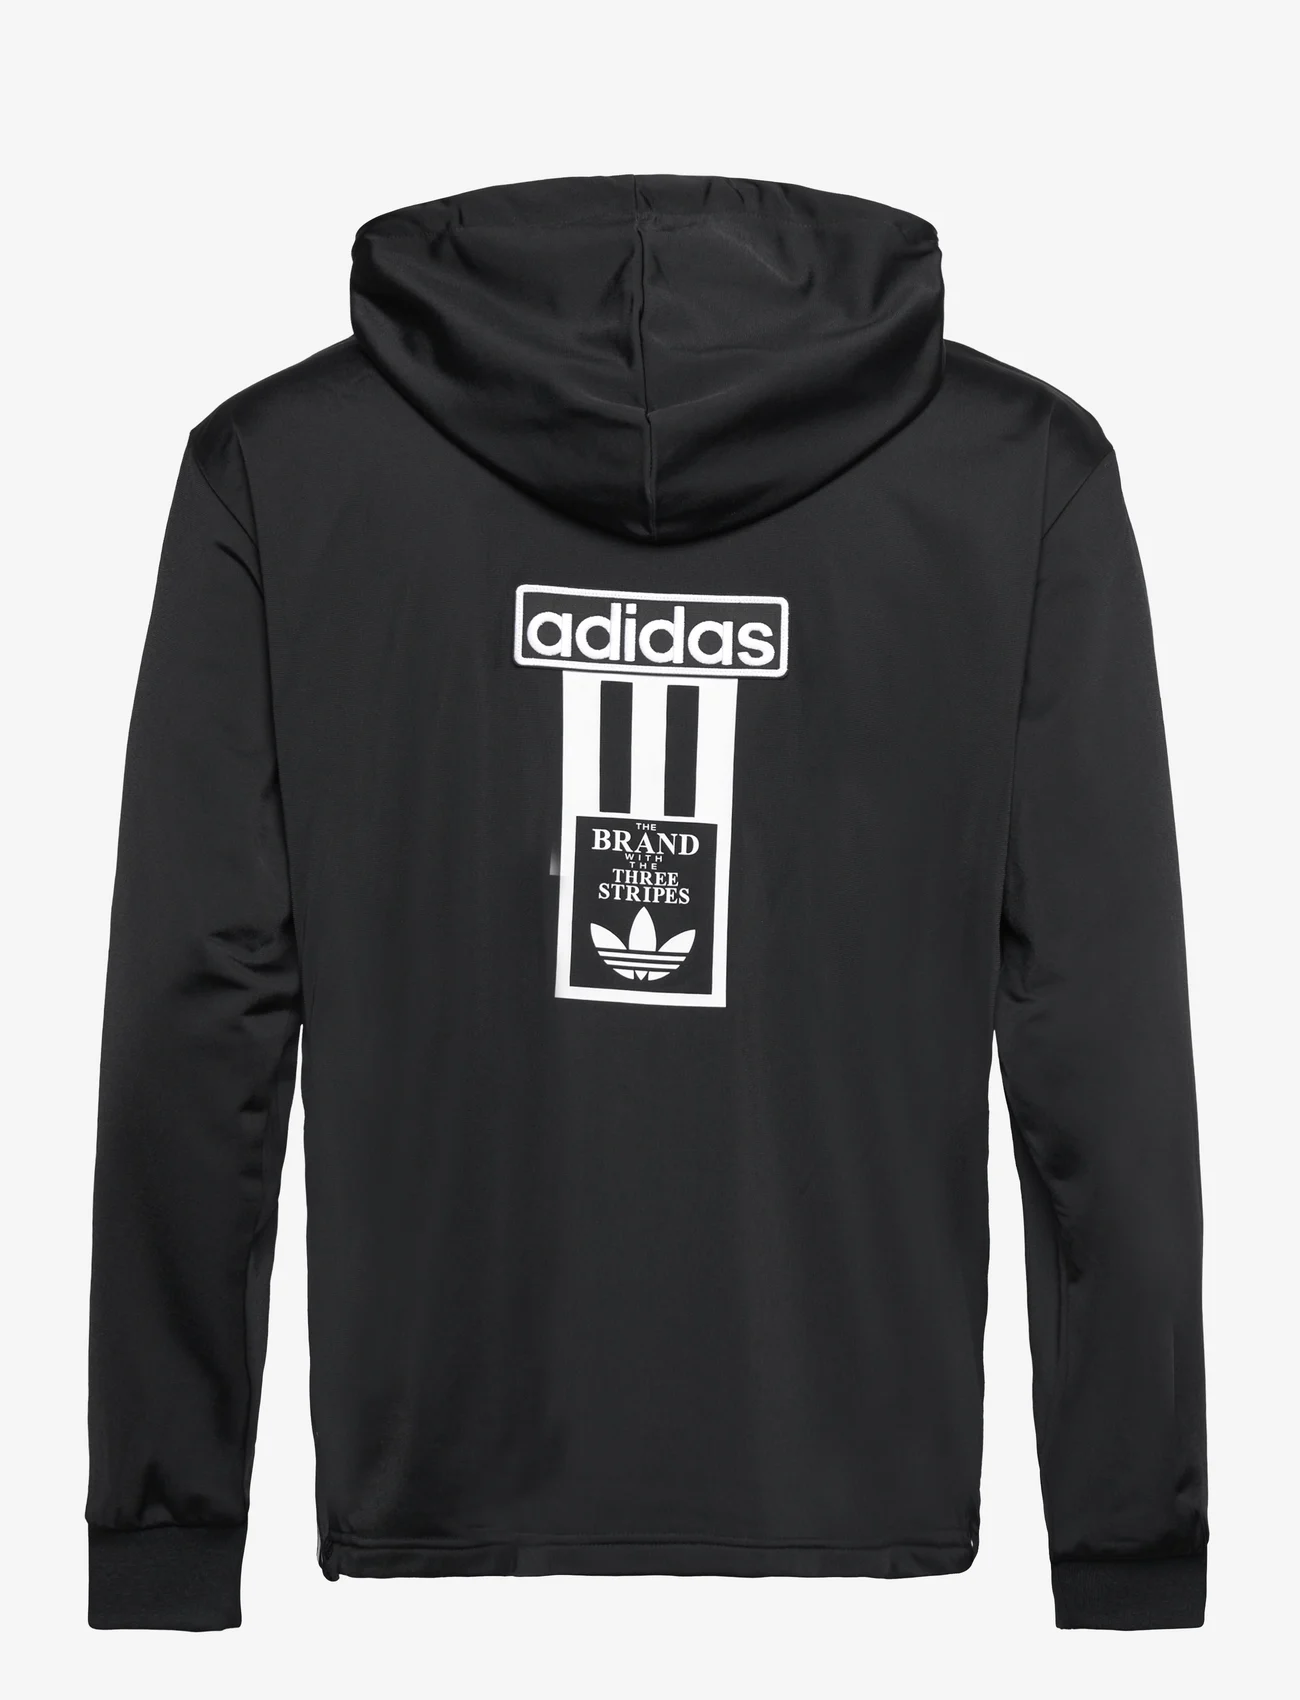 adidas Originals - ADIBREAK FZ HDY - hoodies - black - 1